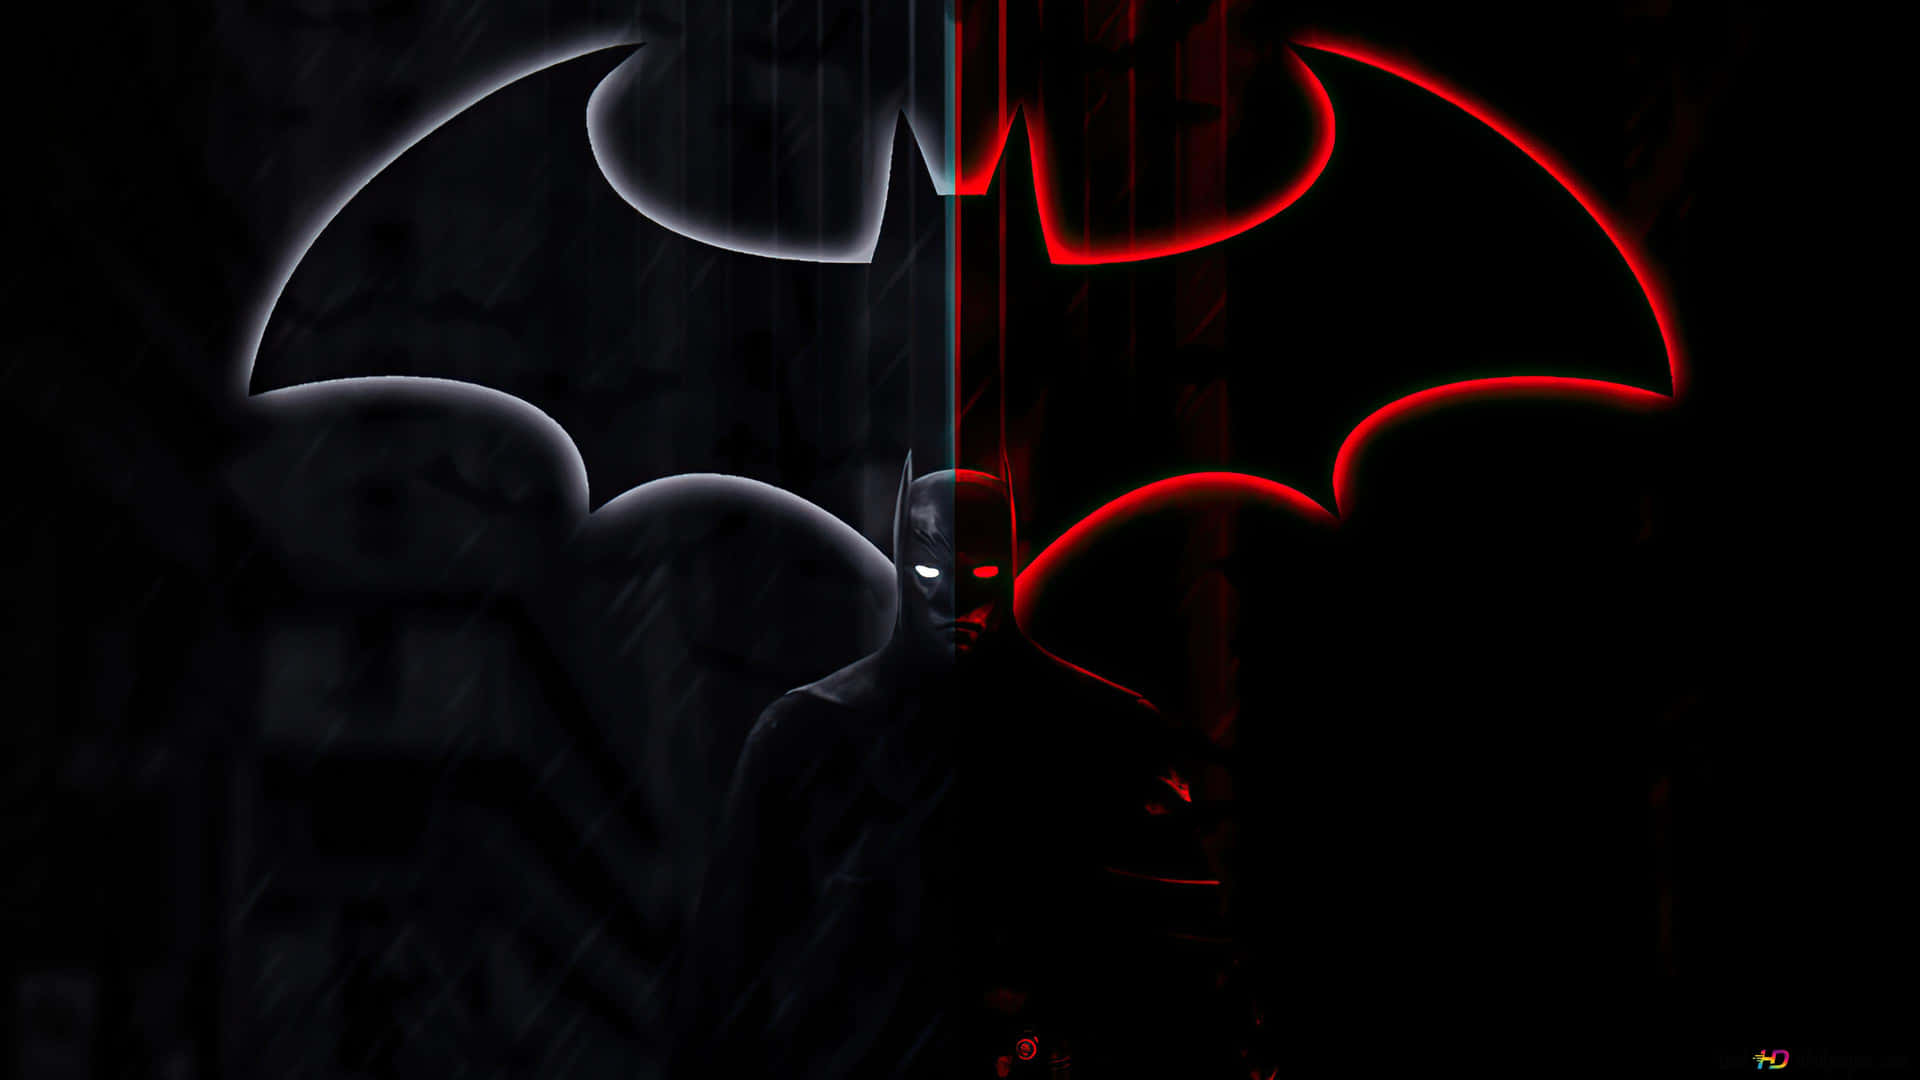 batman logo black and red